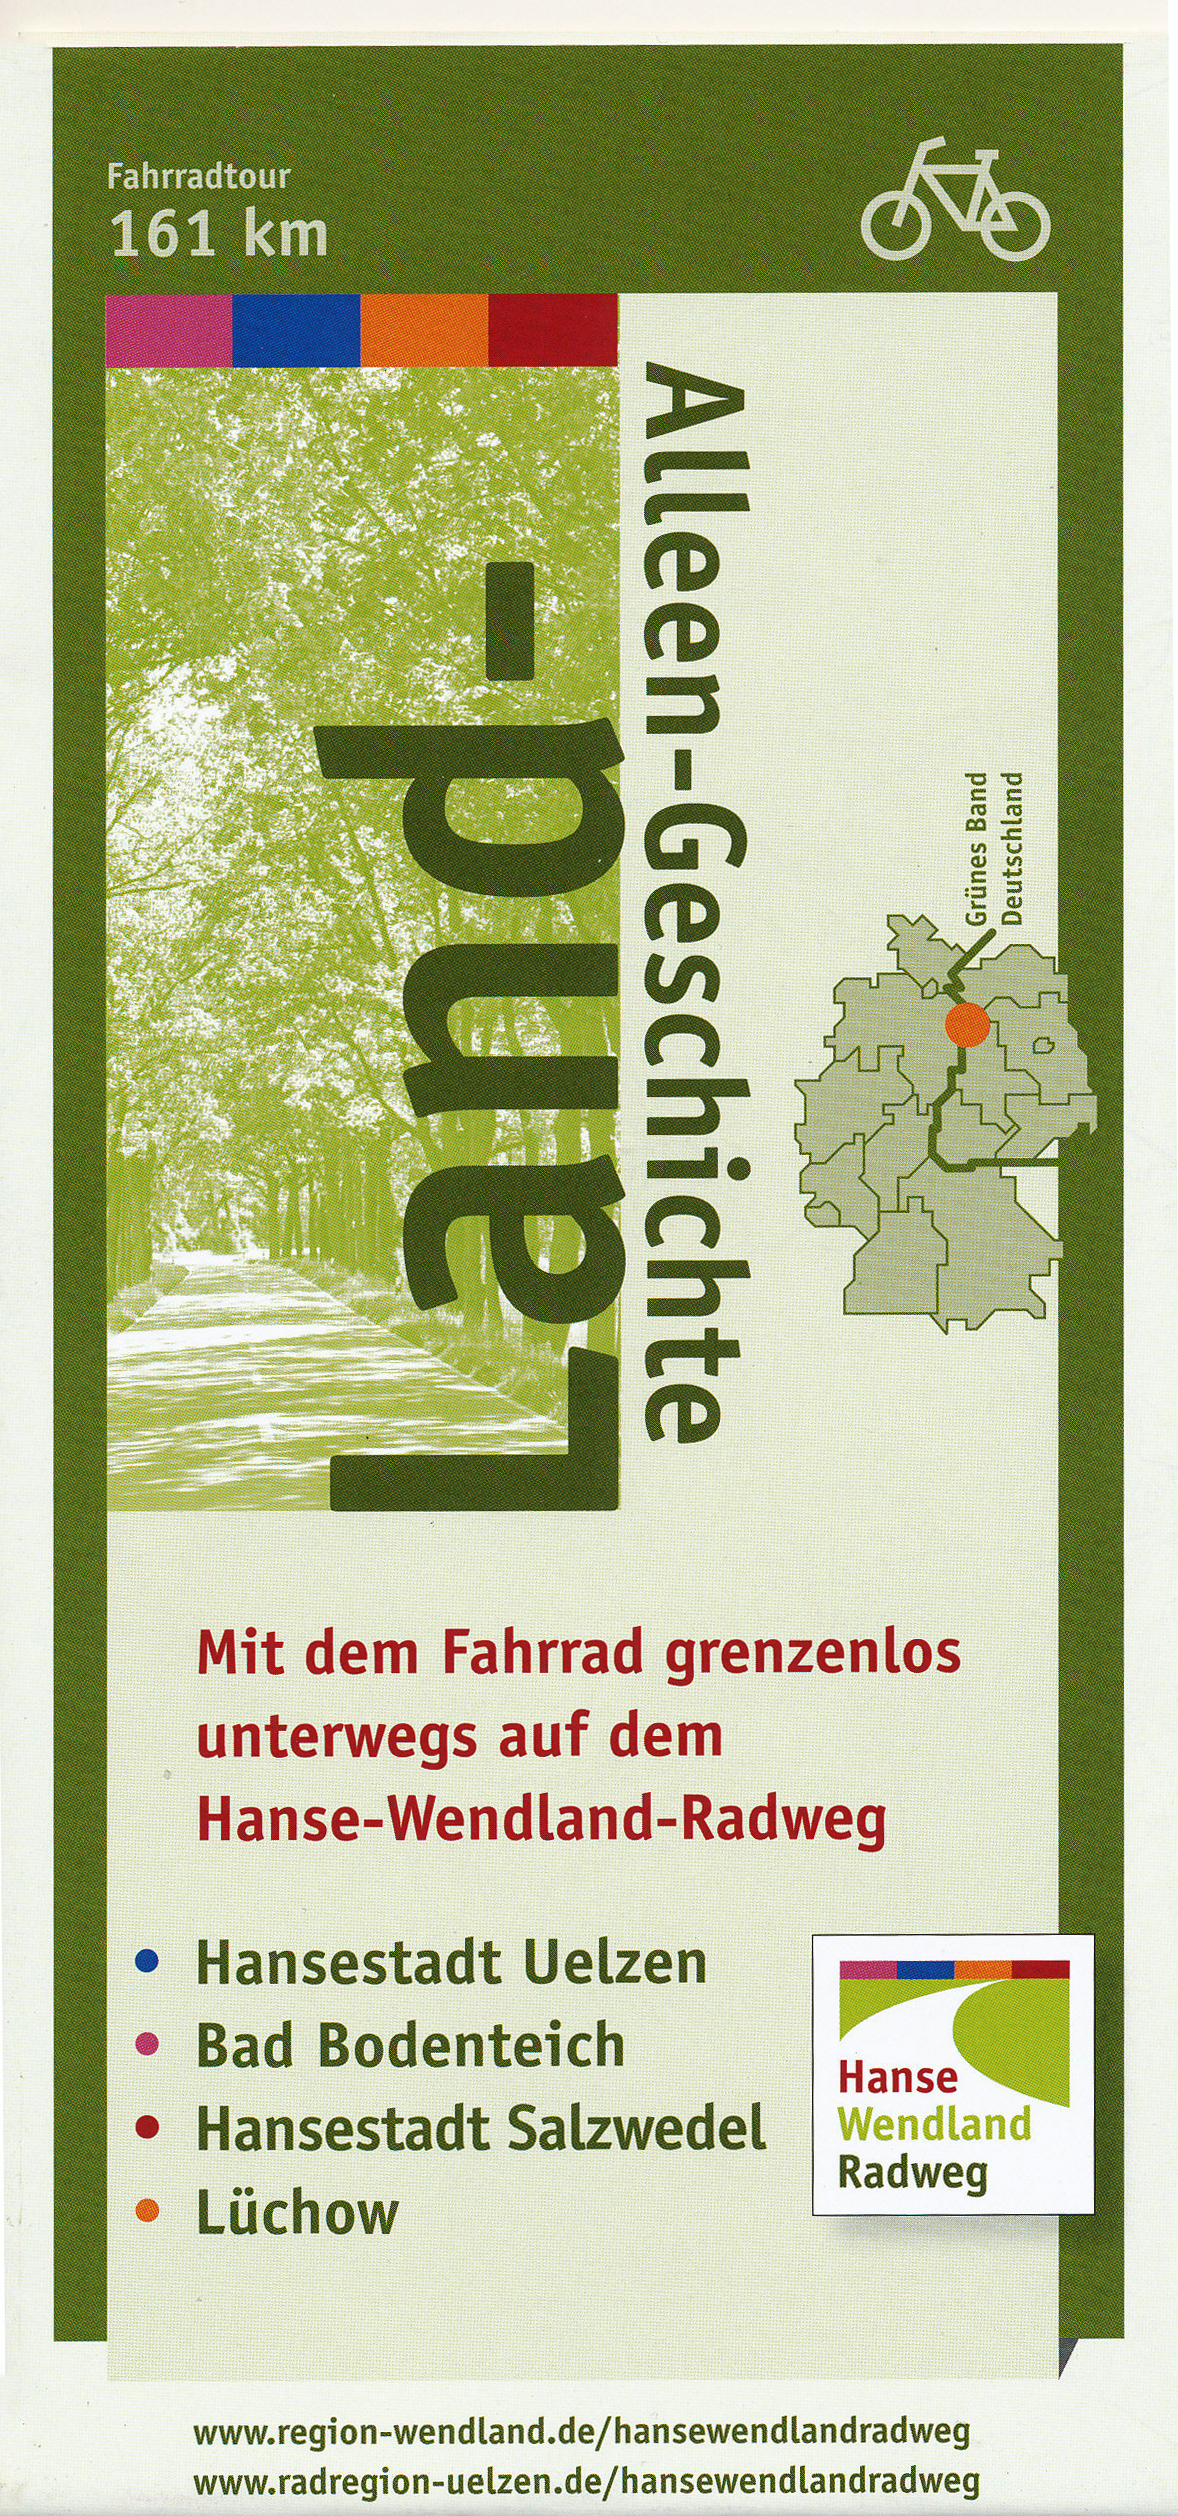 Radkarte "Hanse-Wendland-Radweg"